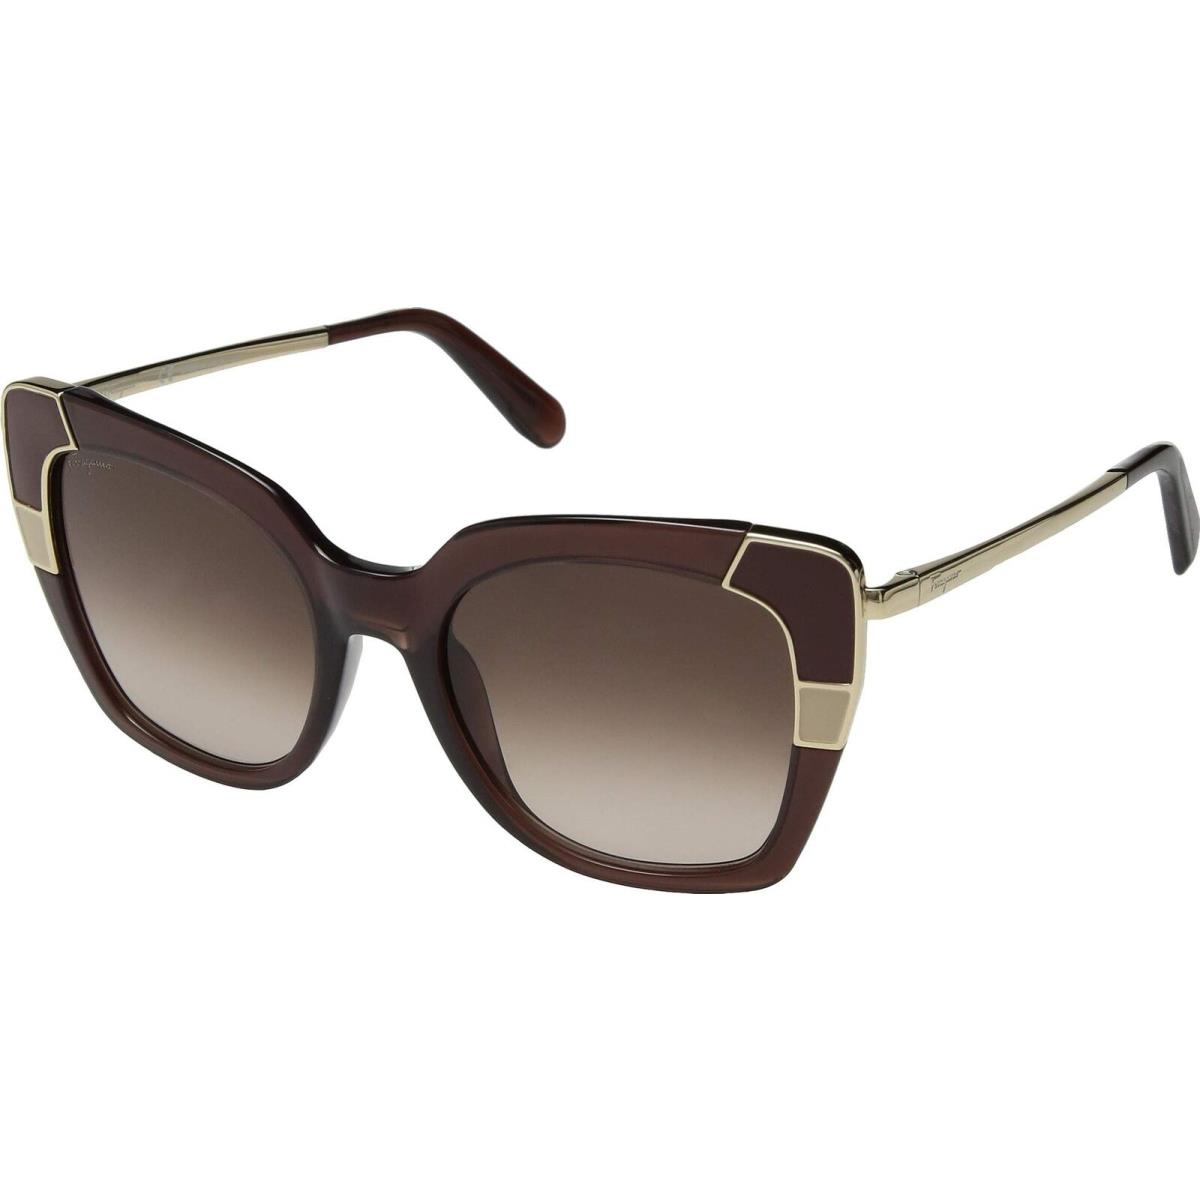 Salvatore Ferragamo SF 889S 210 Crystal Brown Sunglasses with Brown Lenses